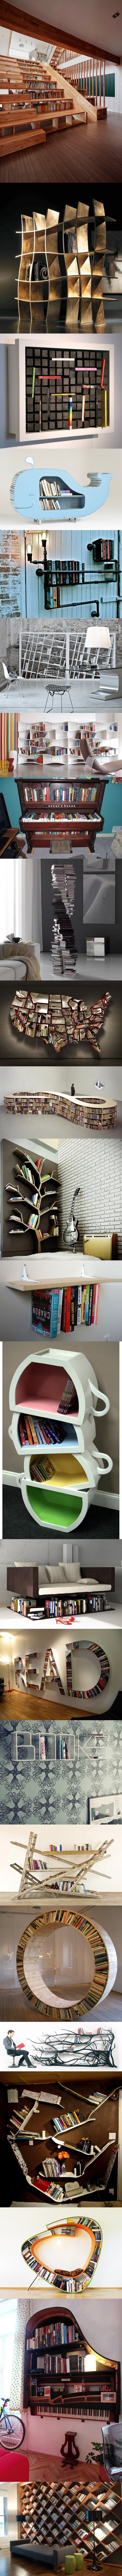 Creative bookshelves